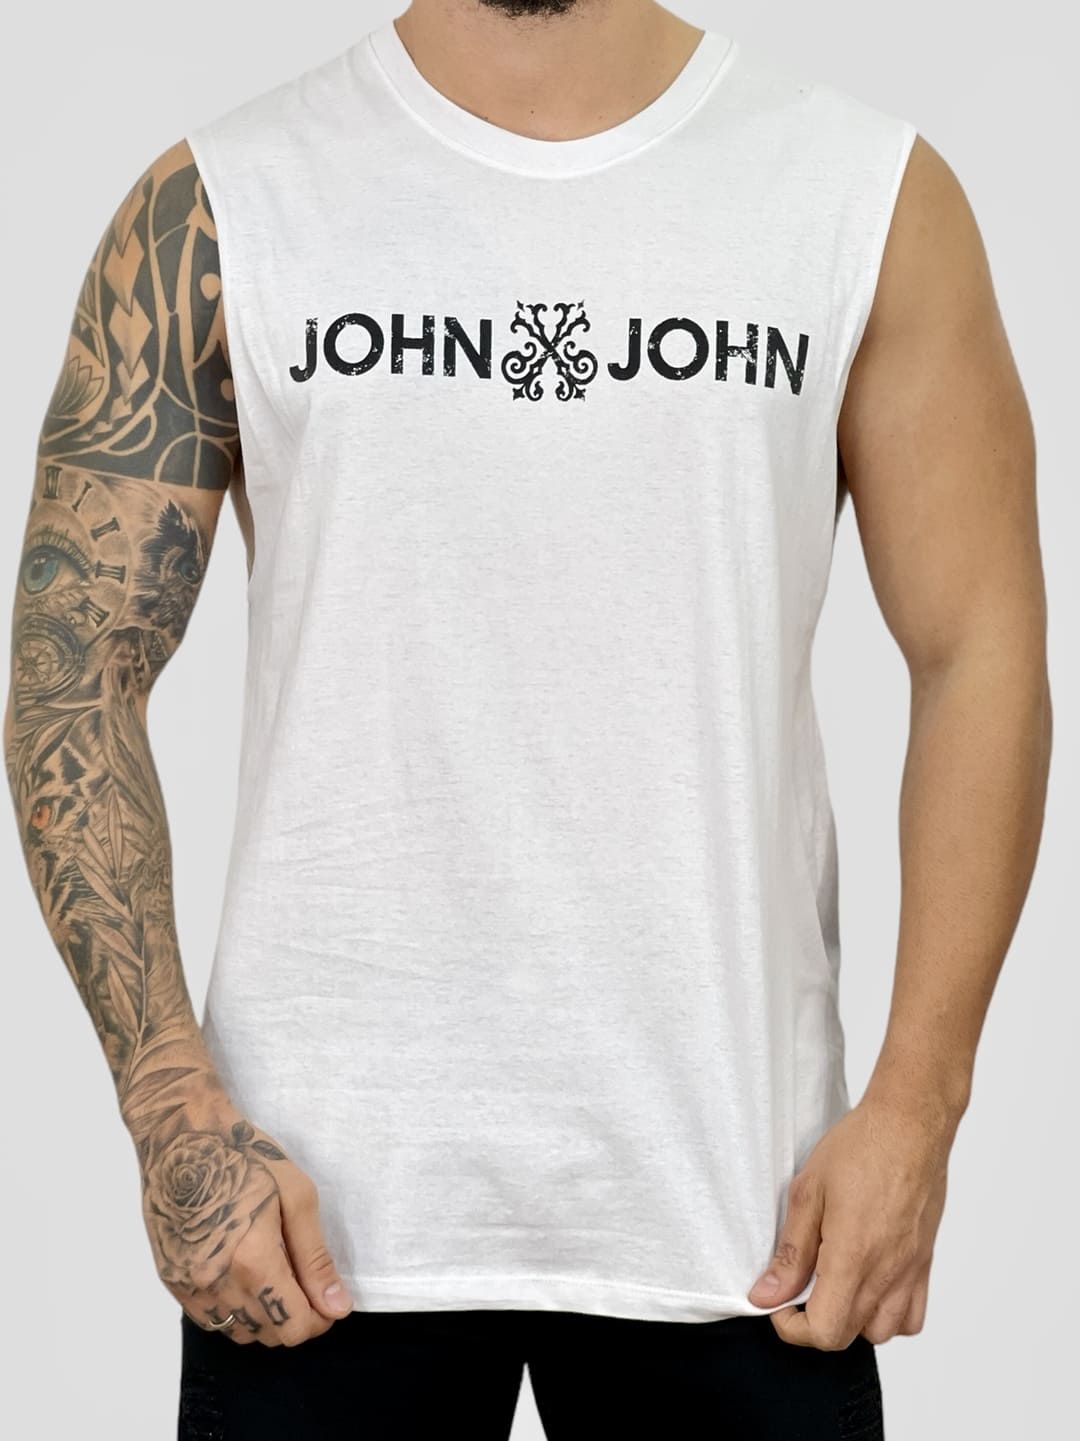 Camiseta Heaven Branco - John John - Imperium Store